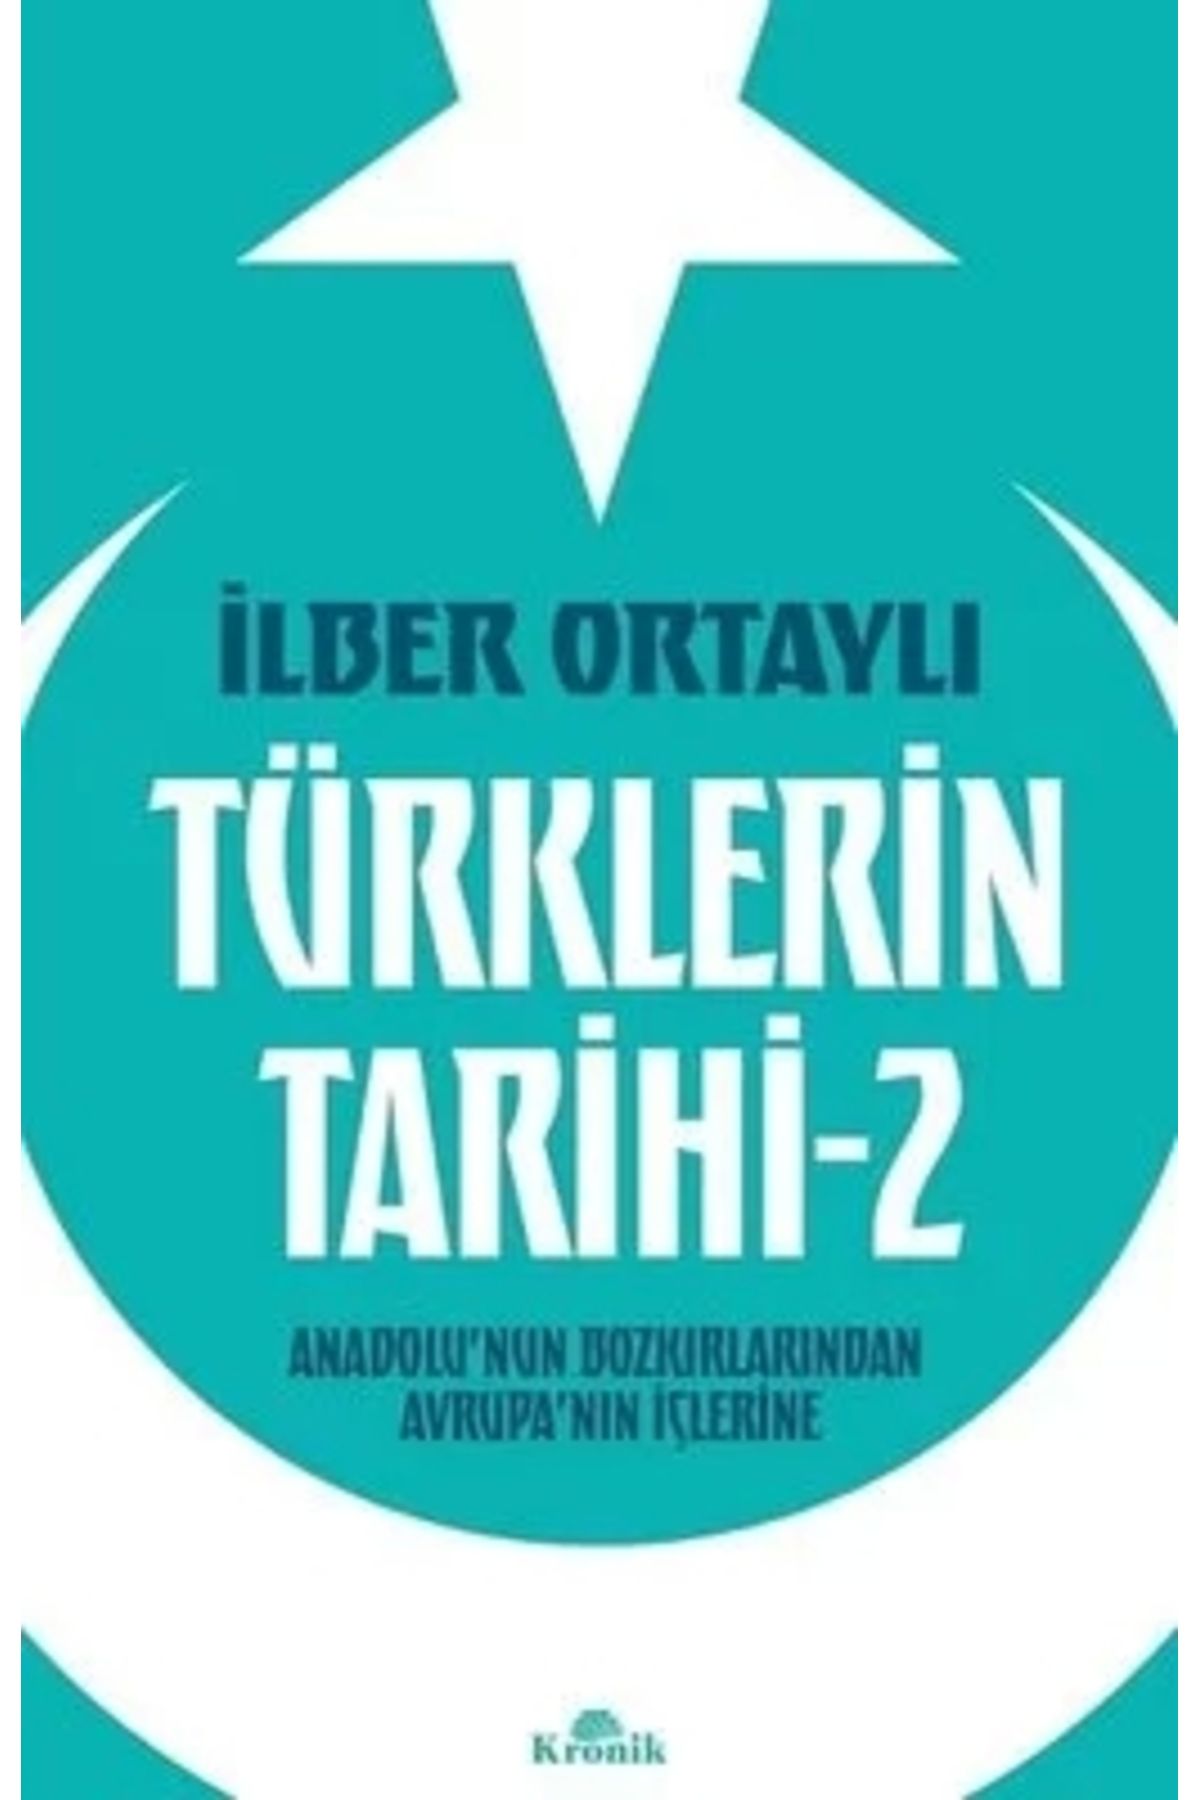 Kronik Kitap Türkleri?n Tari?hi? 2 I?.ortayli